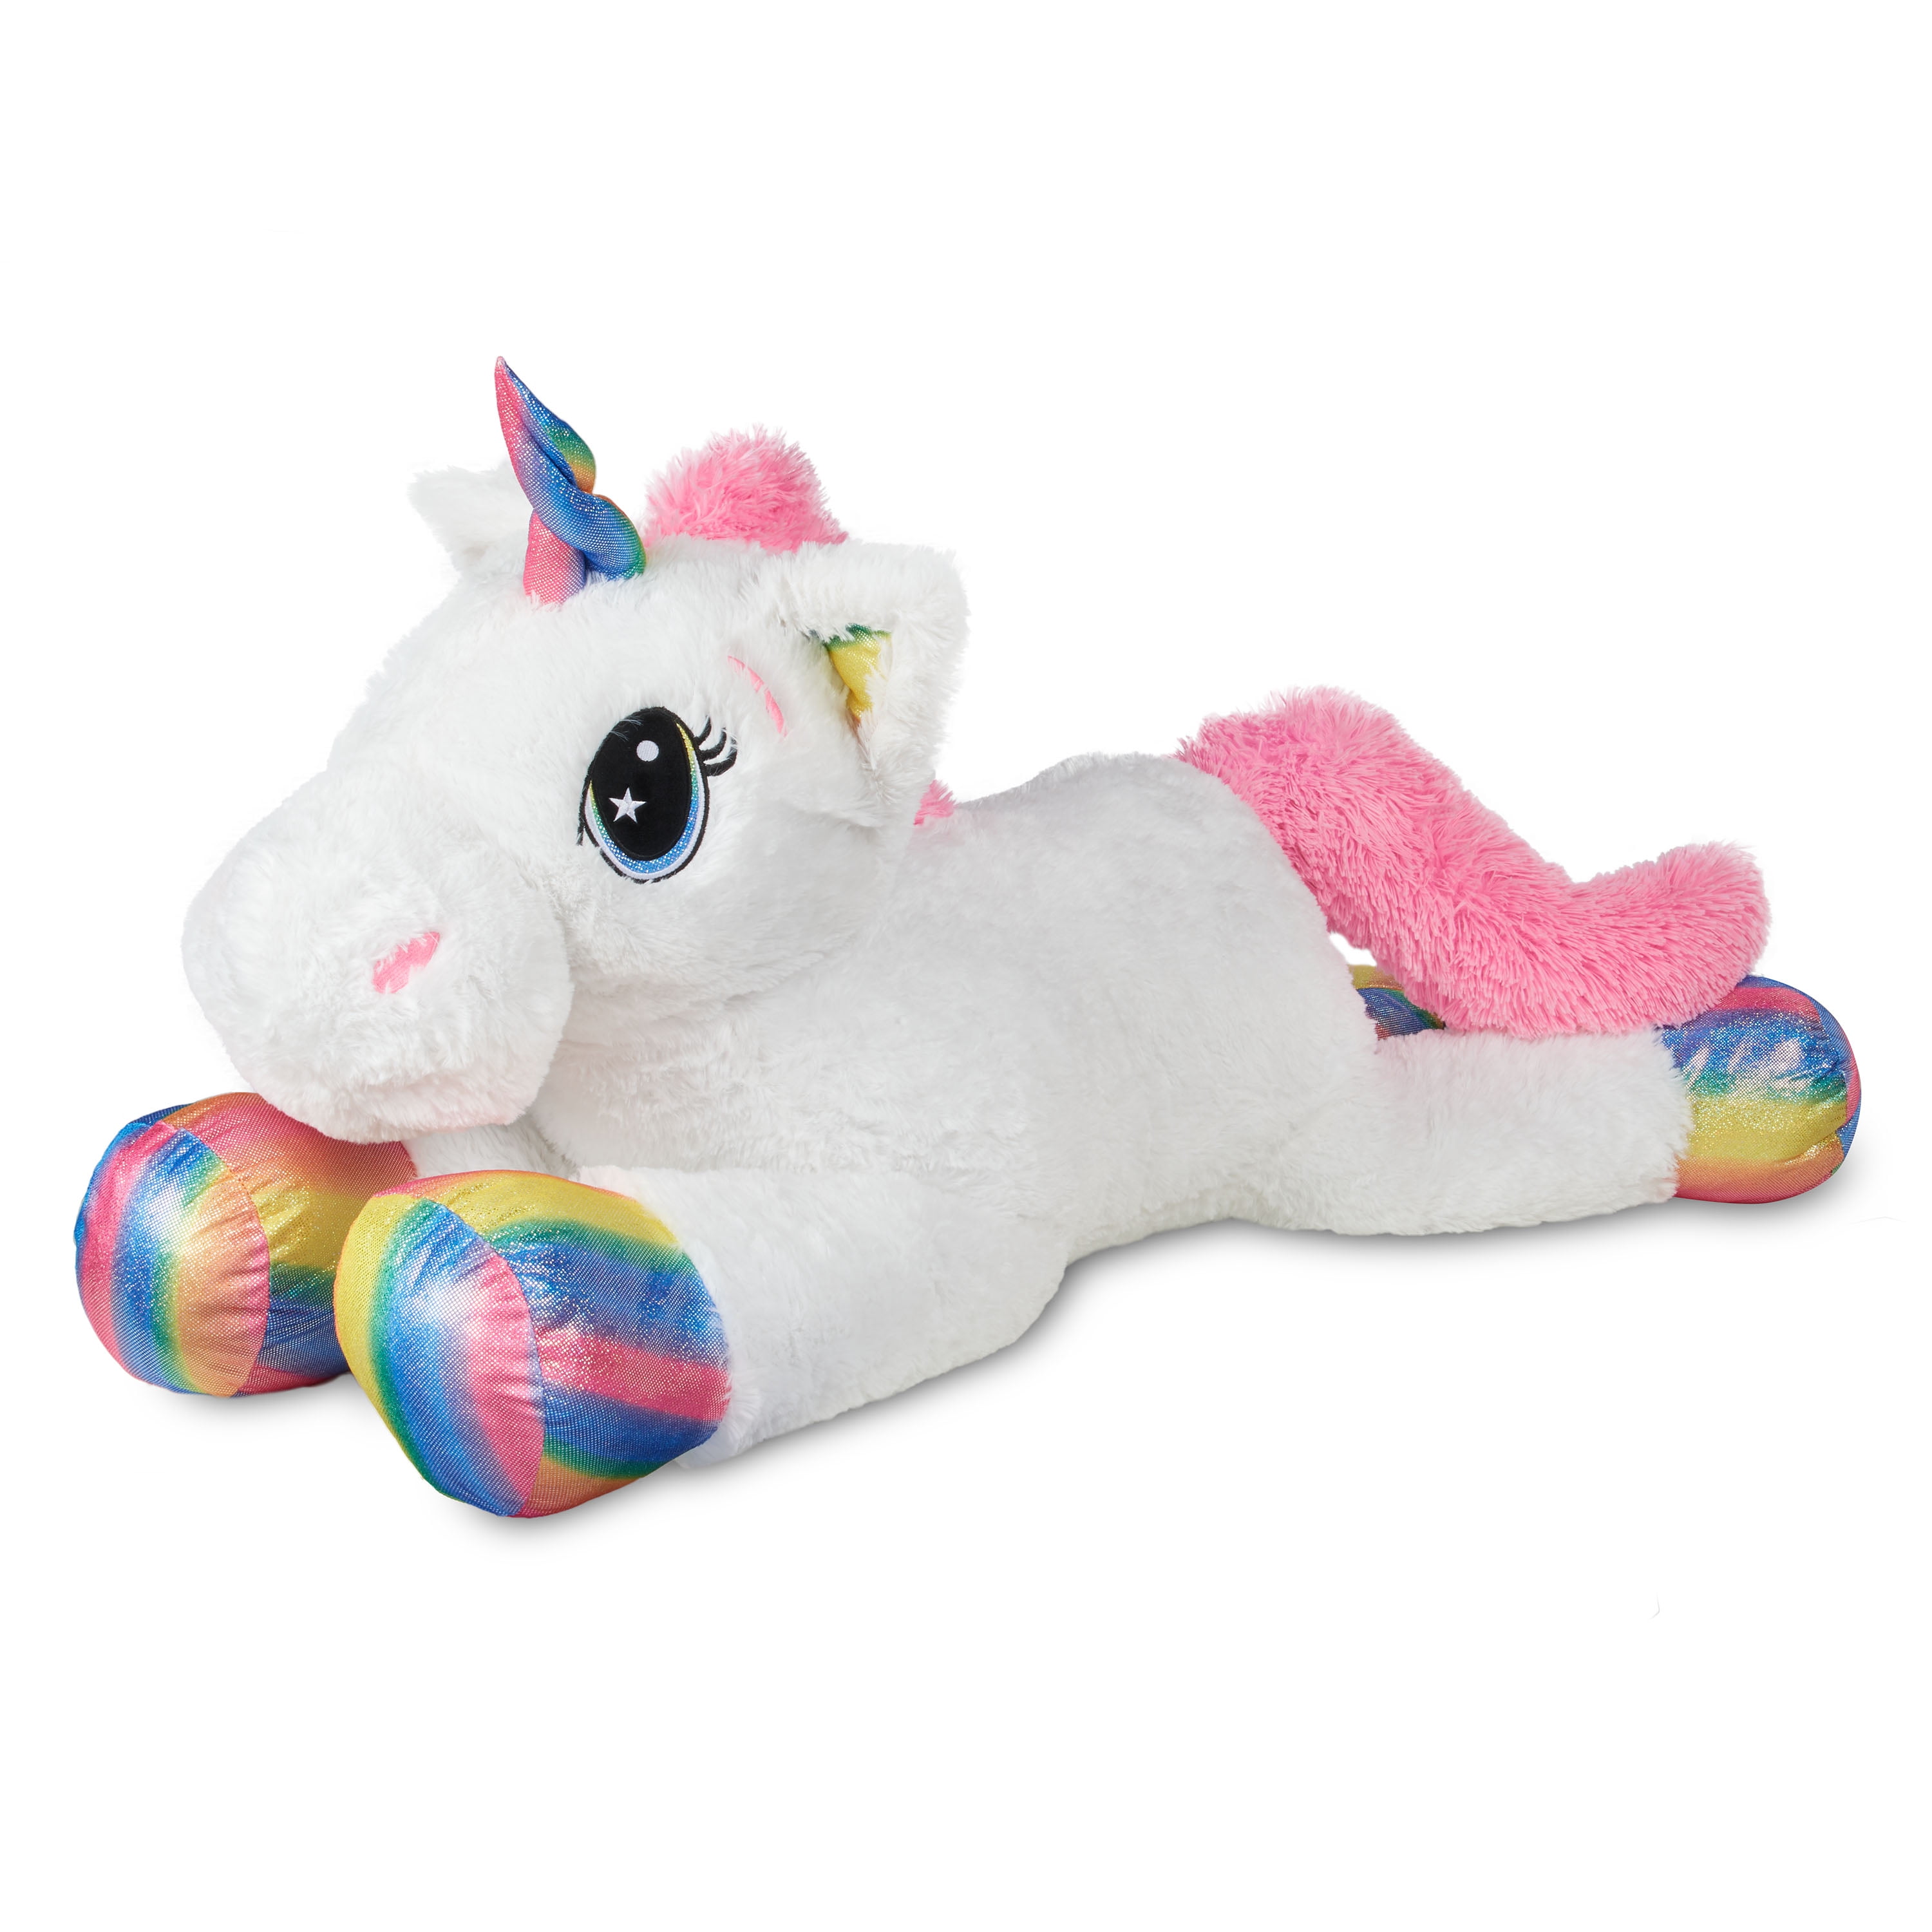 GIANT Stuffed Animal Unicorn Plush 